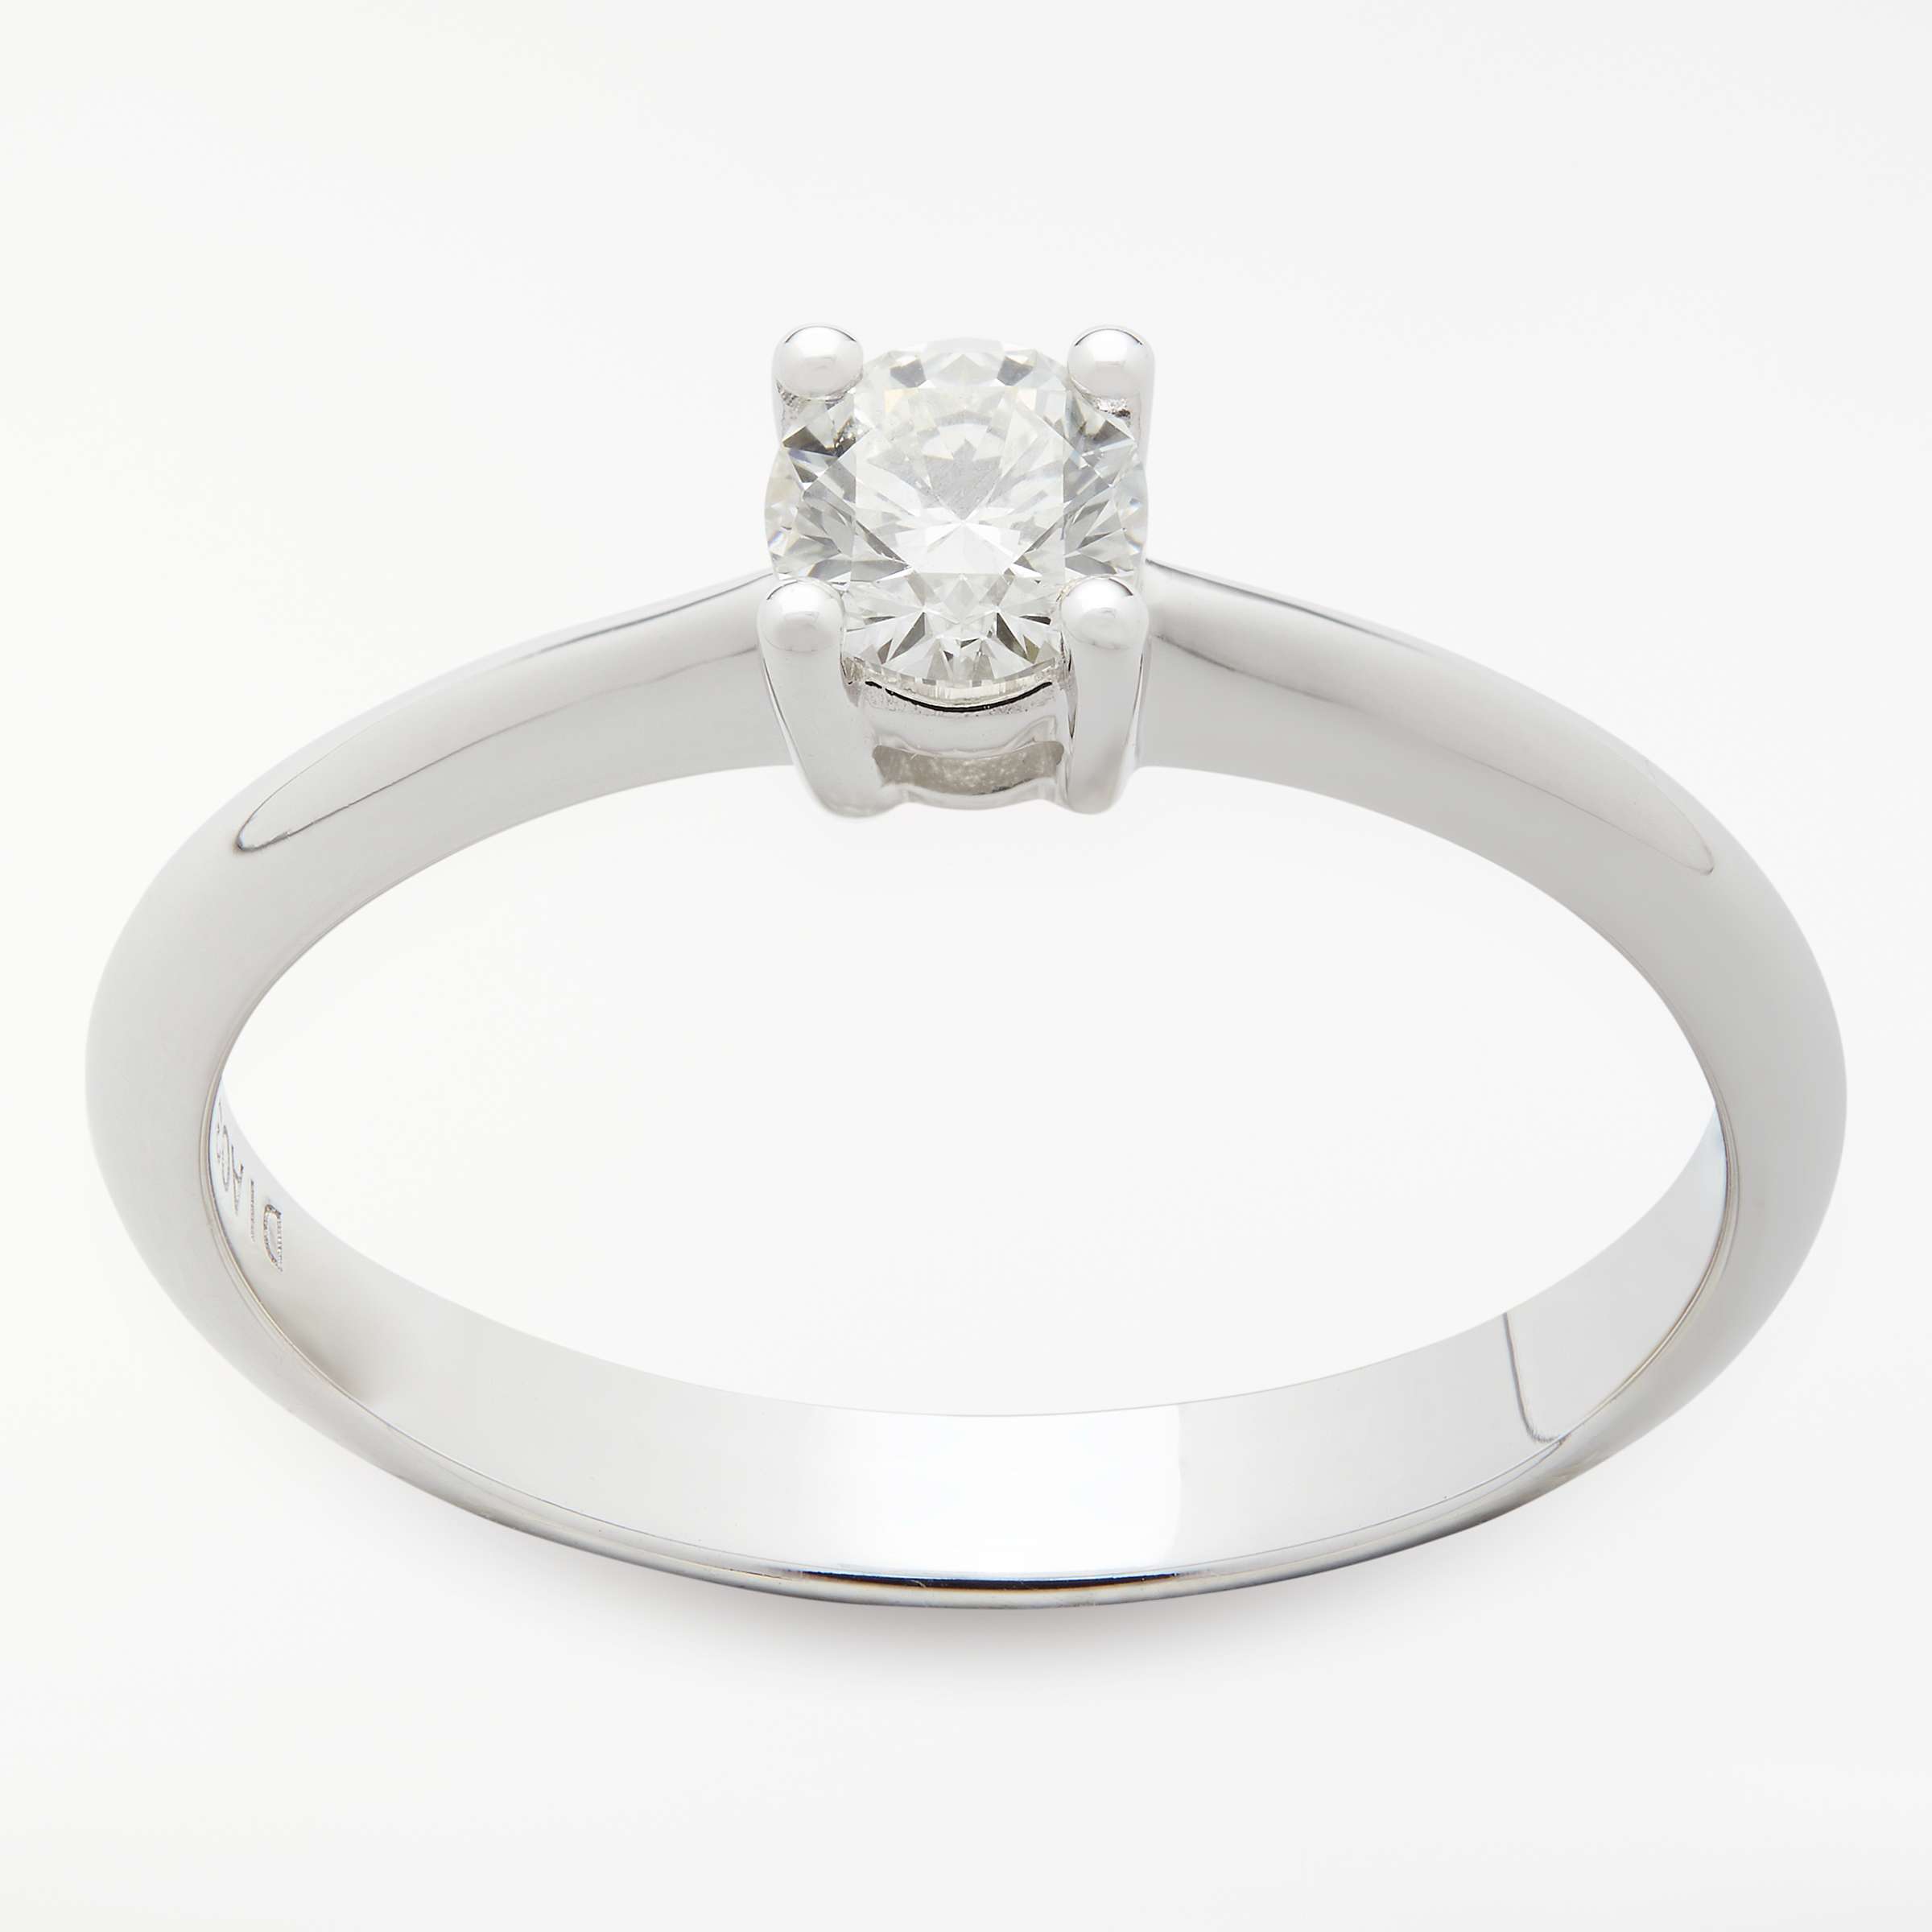 Buy Mogul 18ct White Gold Round Brilliant Diamond Engagement Ring, 0.33ct Online at johnlewis.com